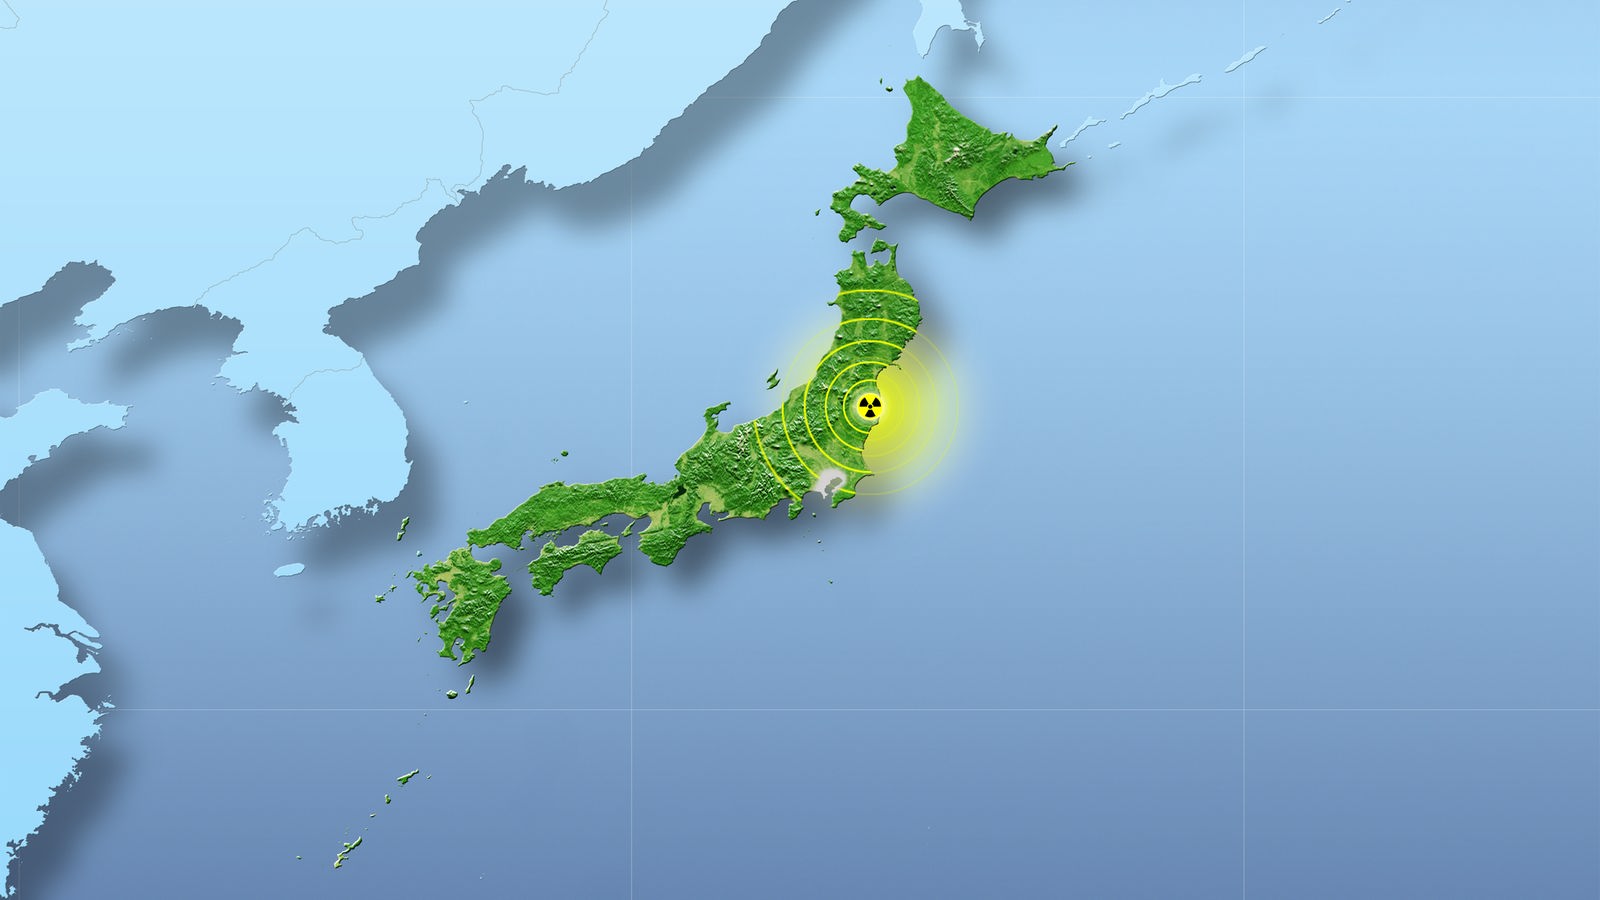 Atomkraft: Fukushima und Atomausstieg - Atomkraft - Technik - Planet Wissen